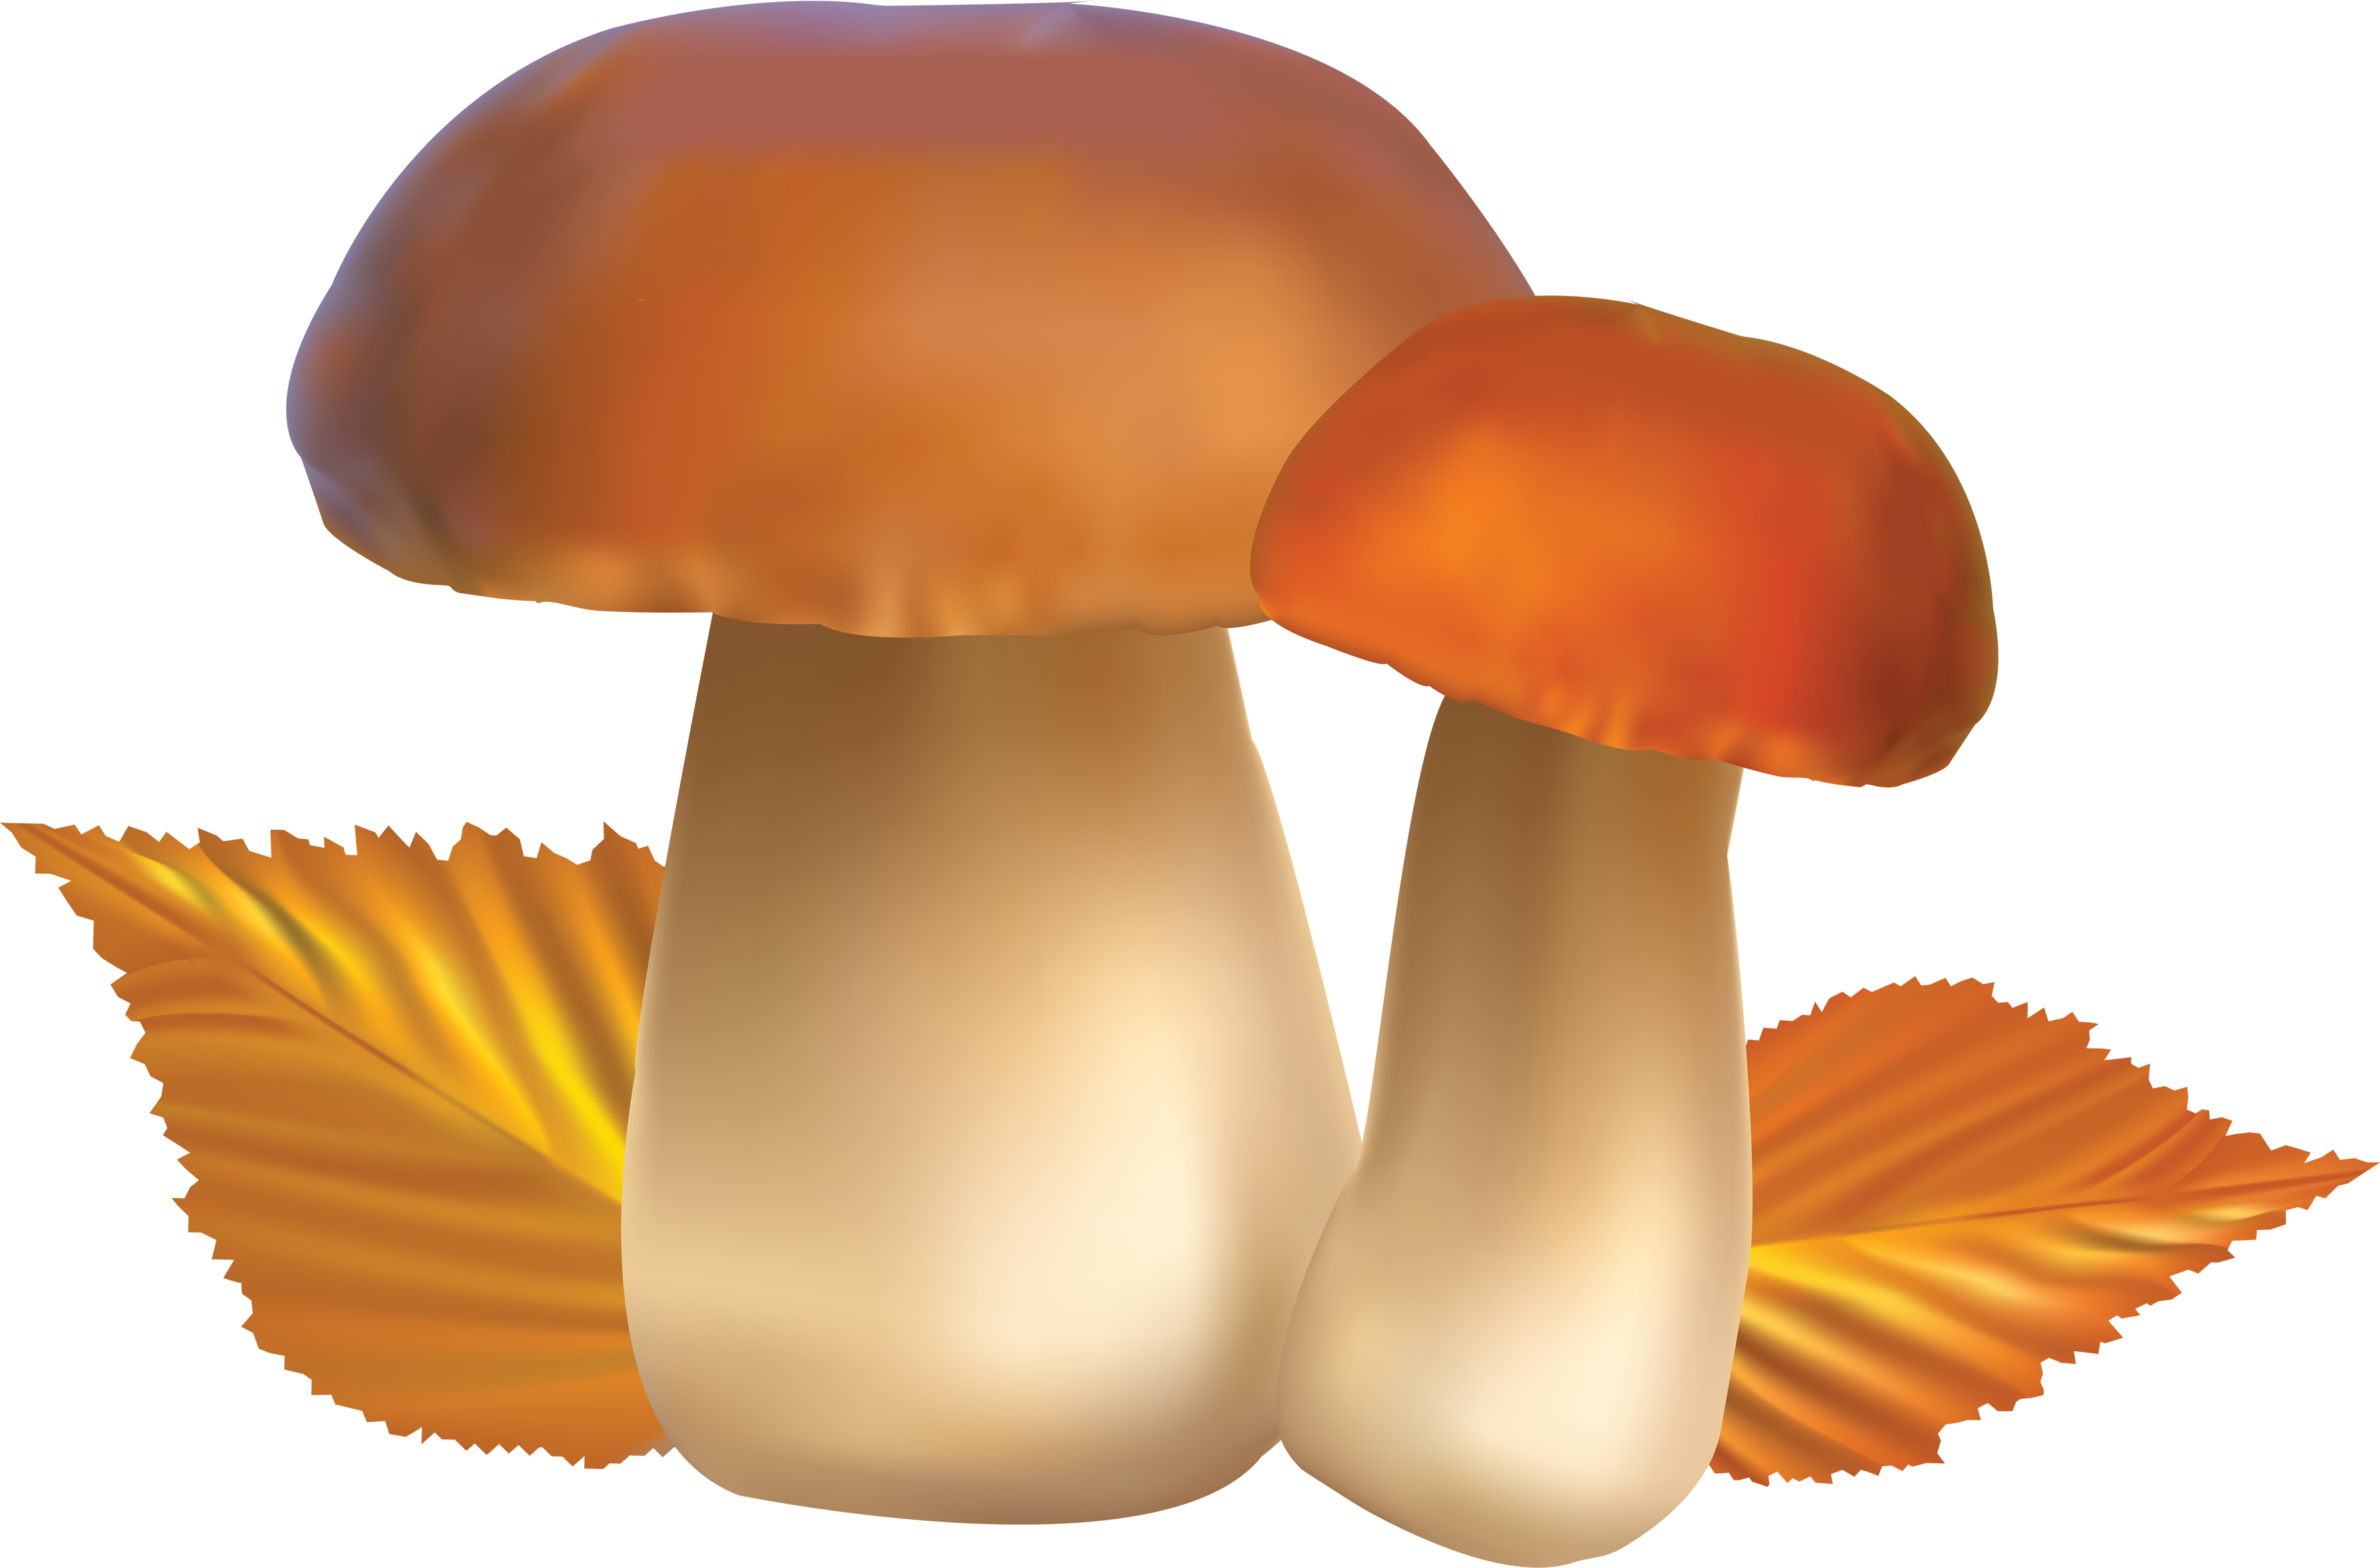 Mushroom Bing Images Mushrooms Image Hd Photo Clipart